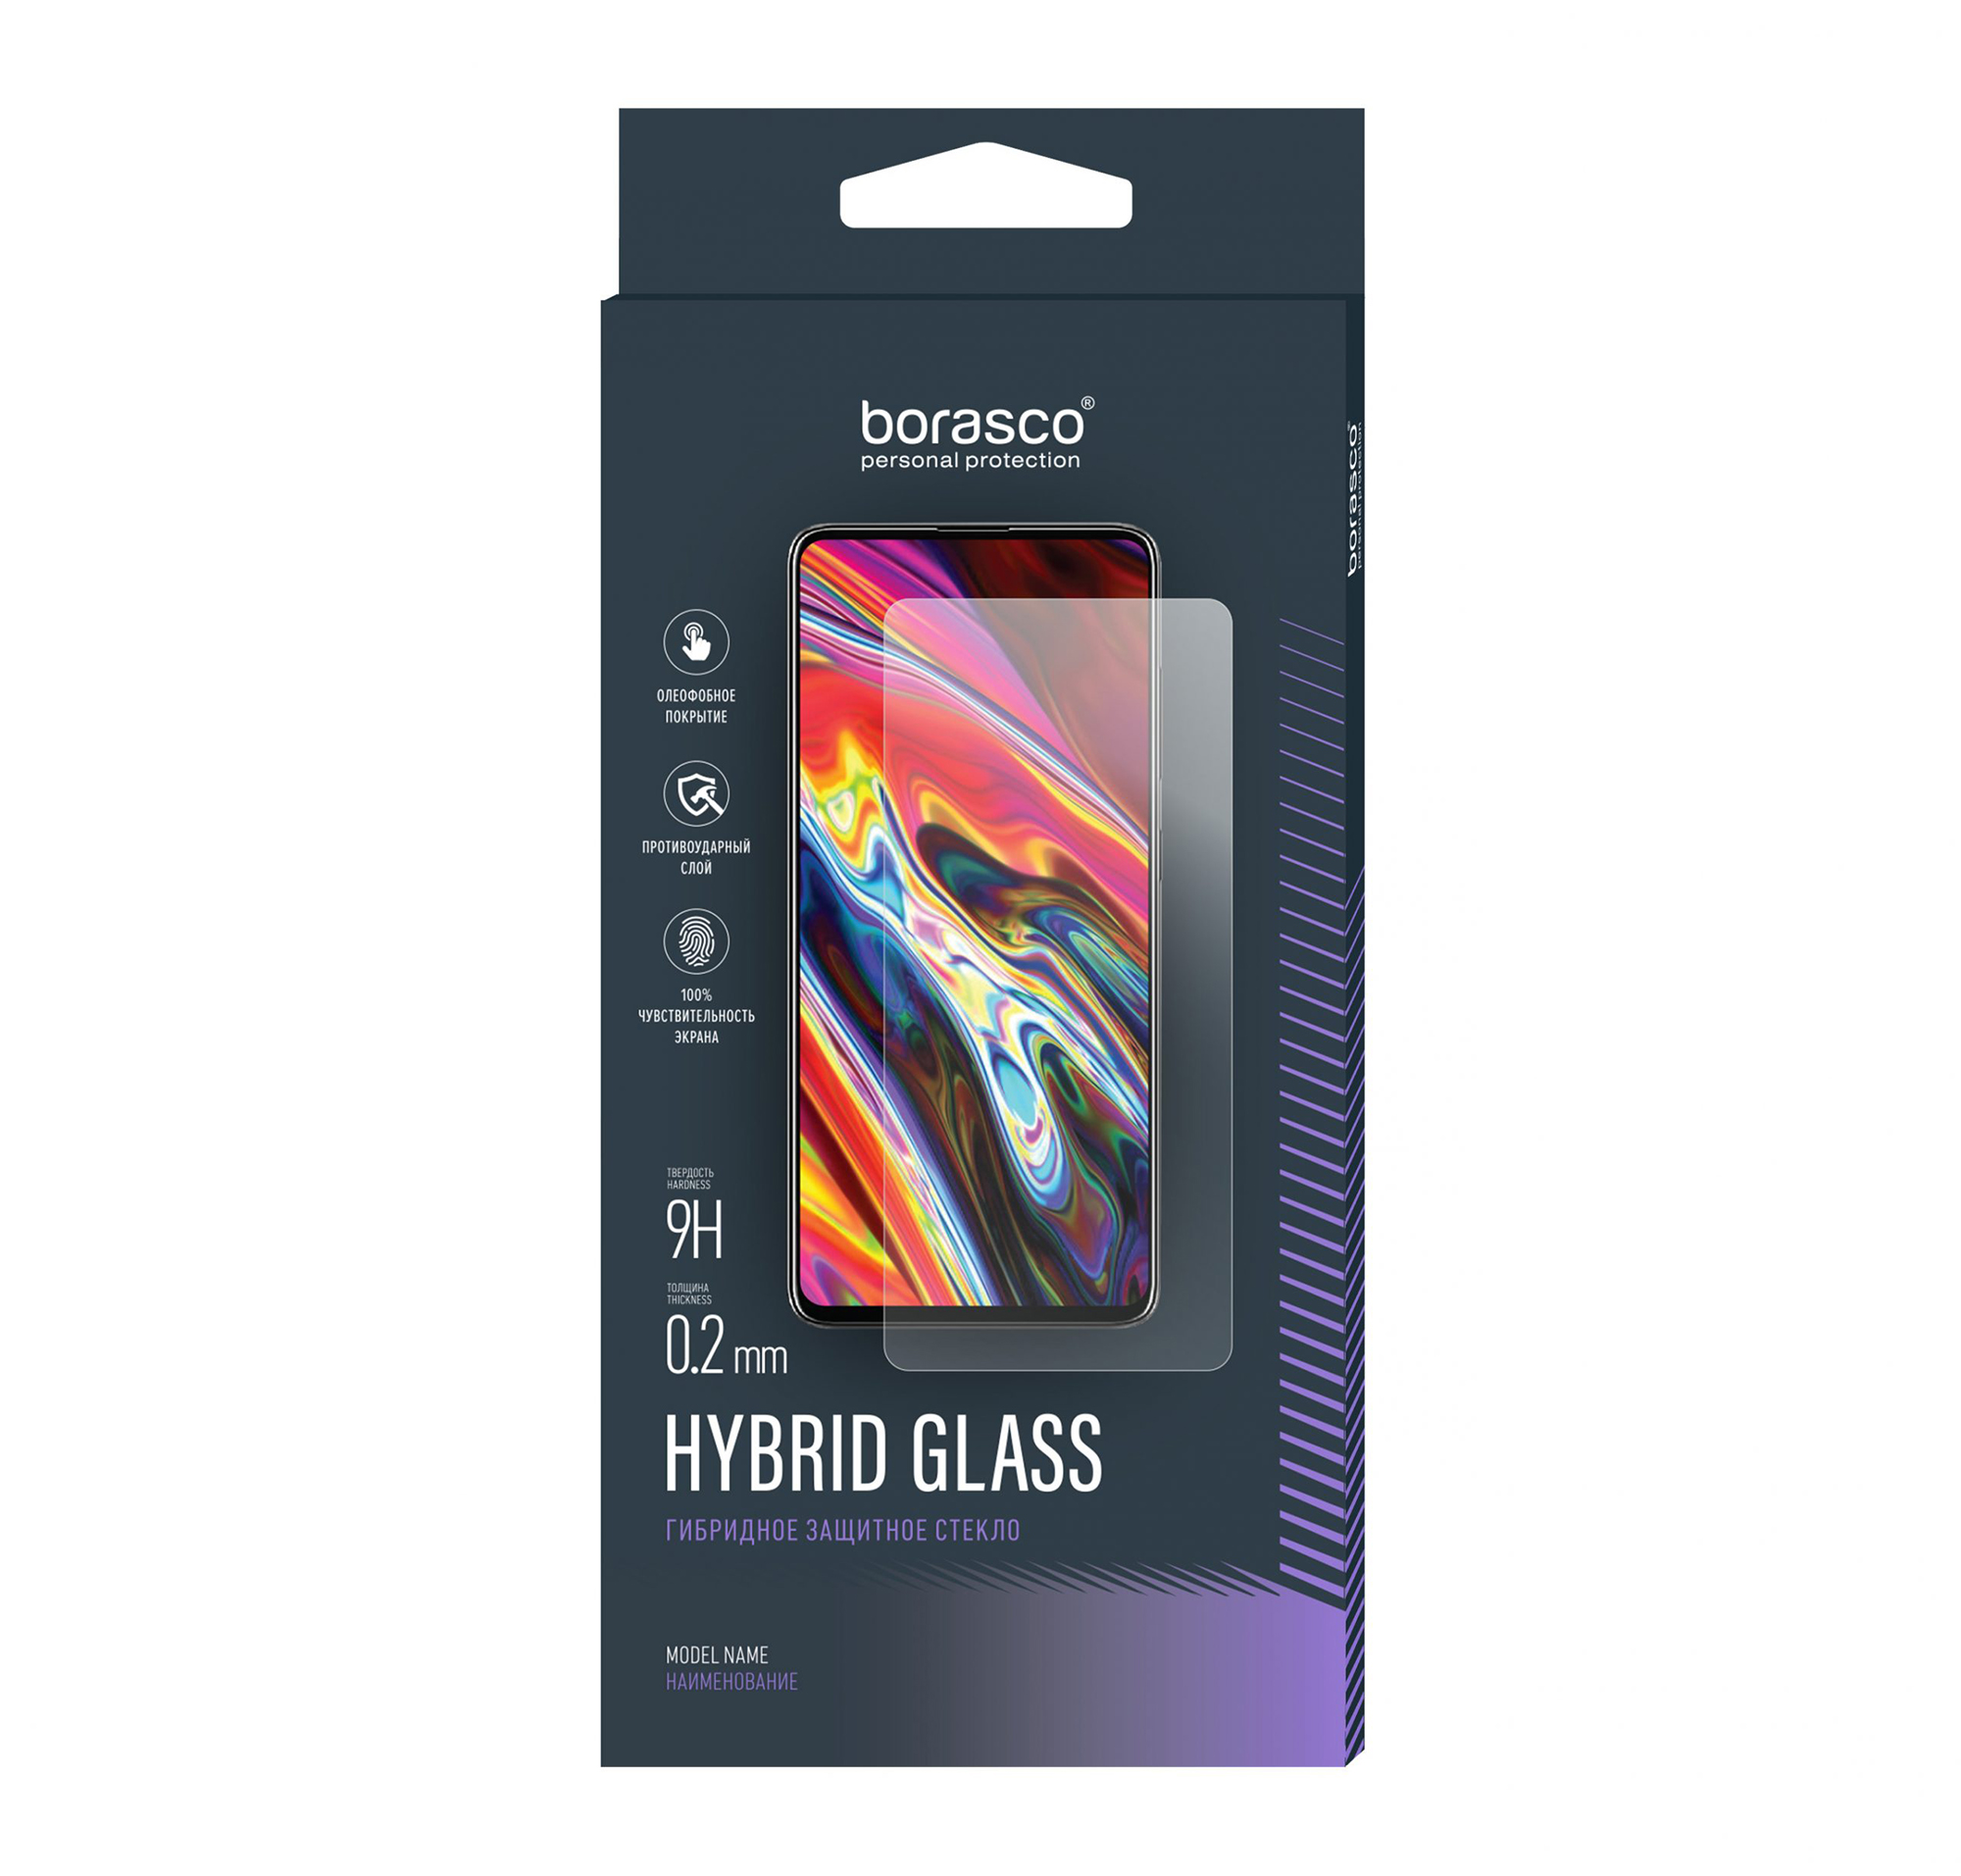 Защитное стекло Hybrid Glass для Huawei P9